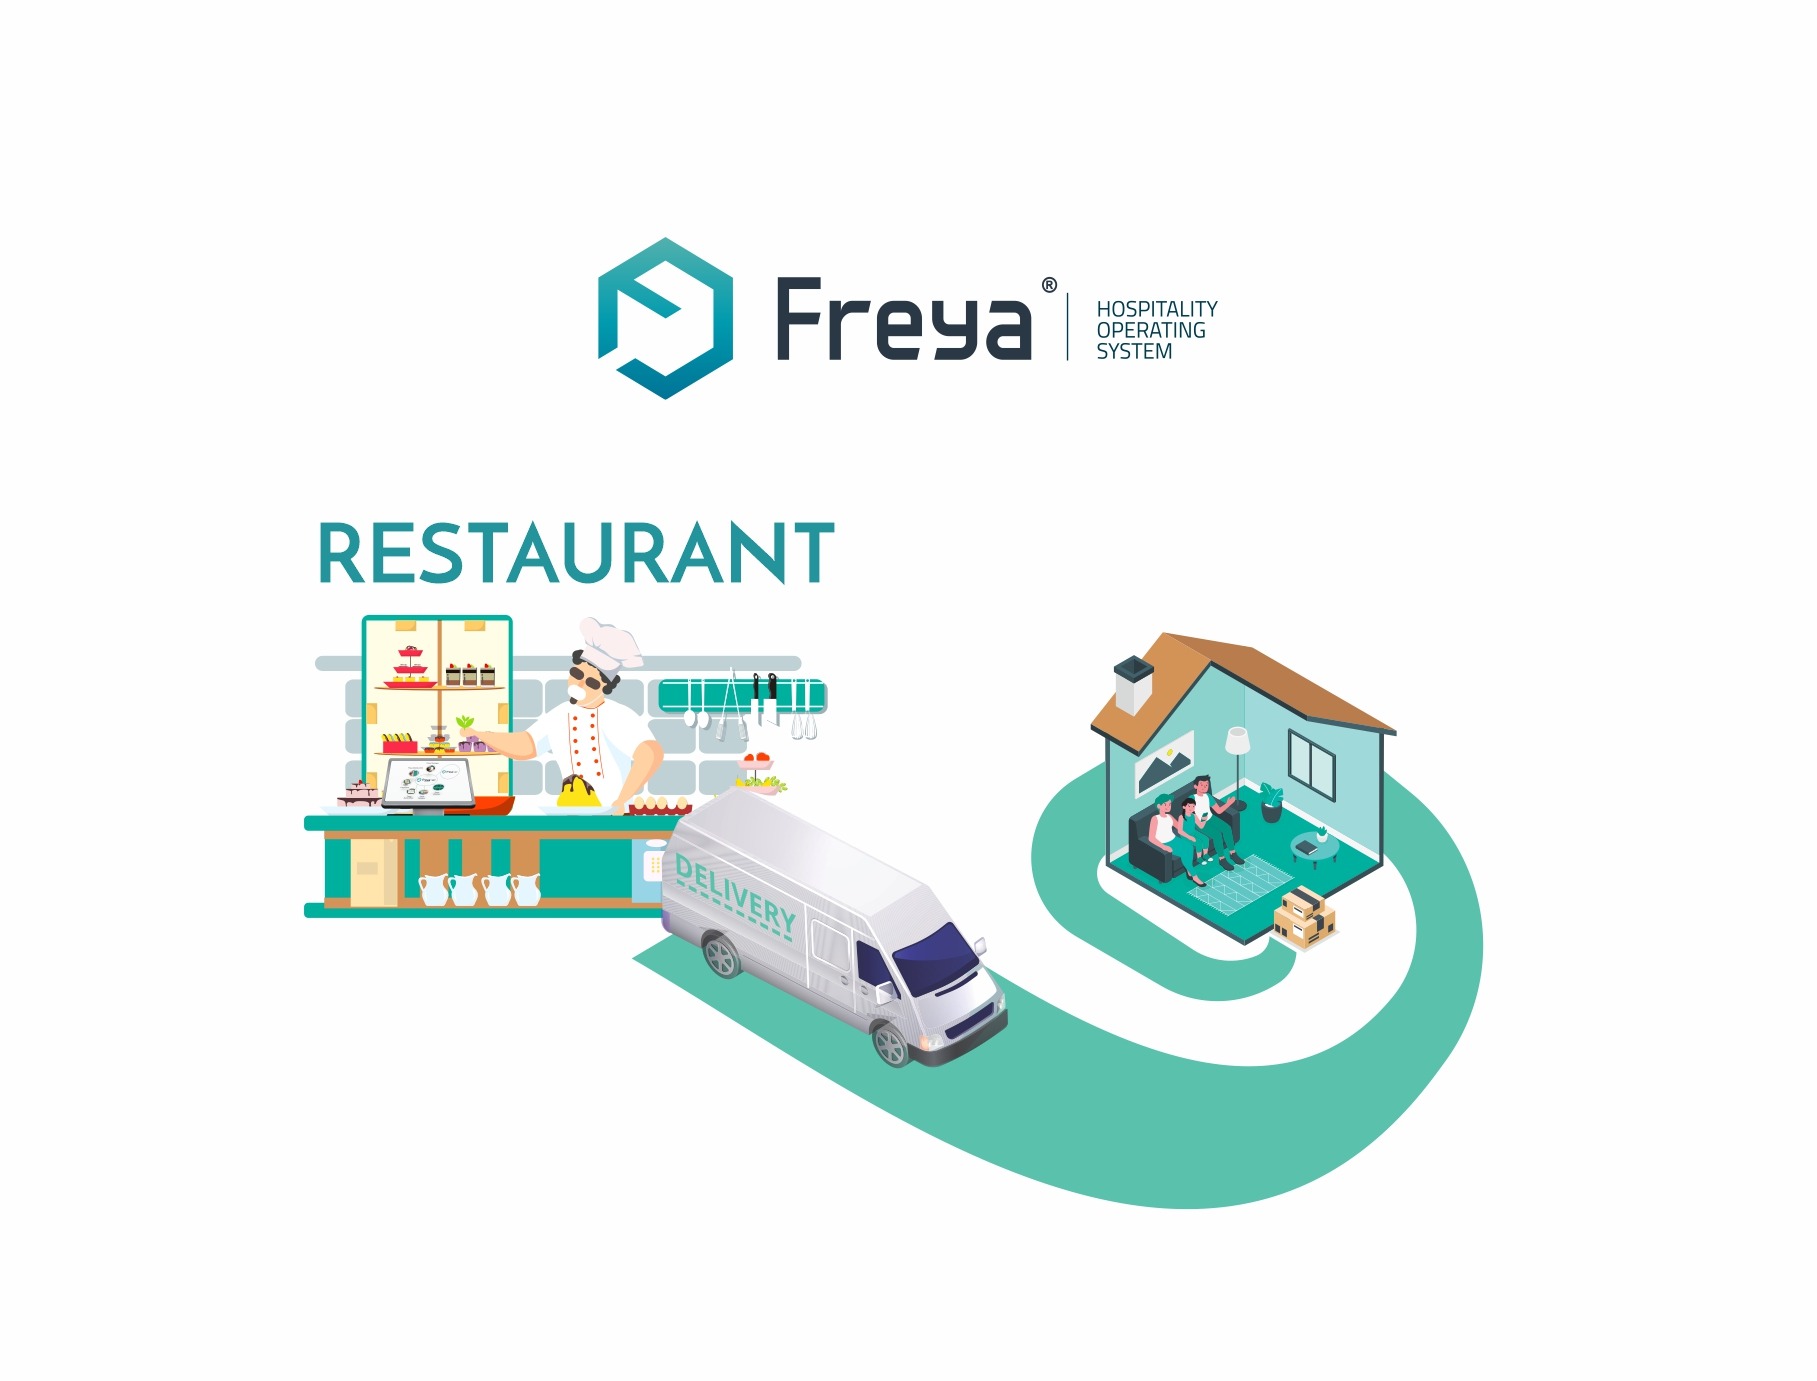 Freya Delivery Restaurant - Freya POS